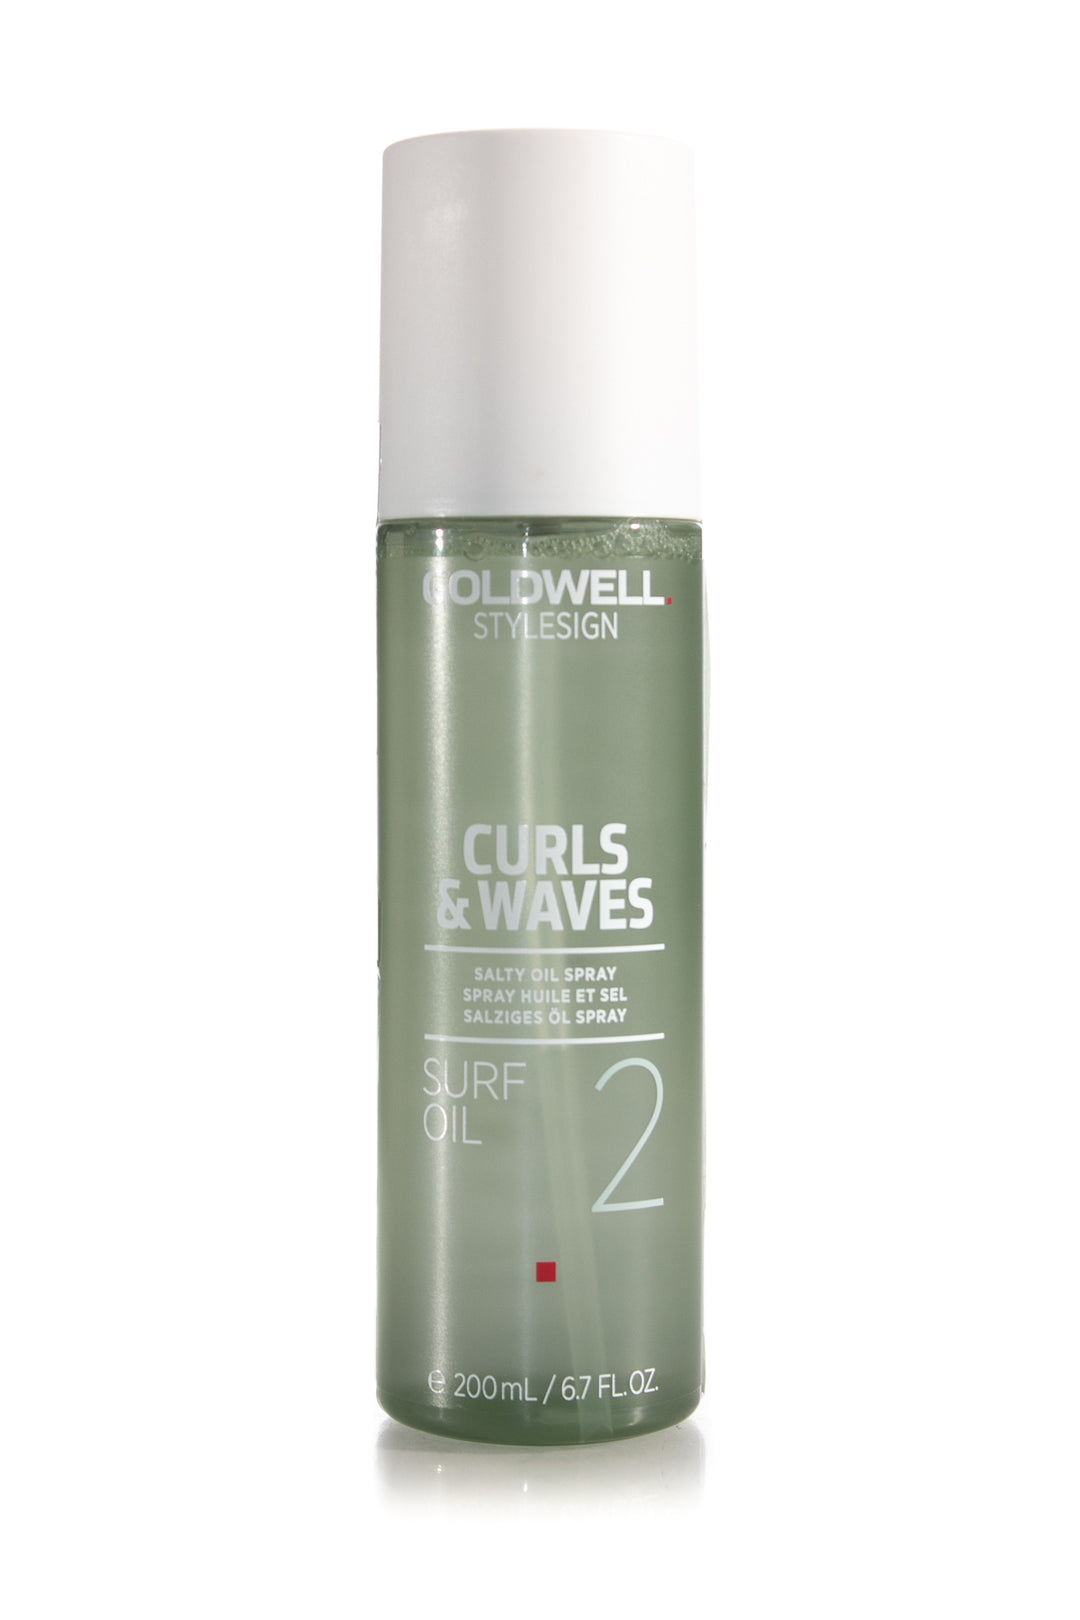 goldwell-stylesign-curls-&-waves-surf-oil-200ml